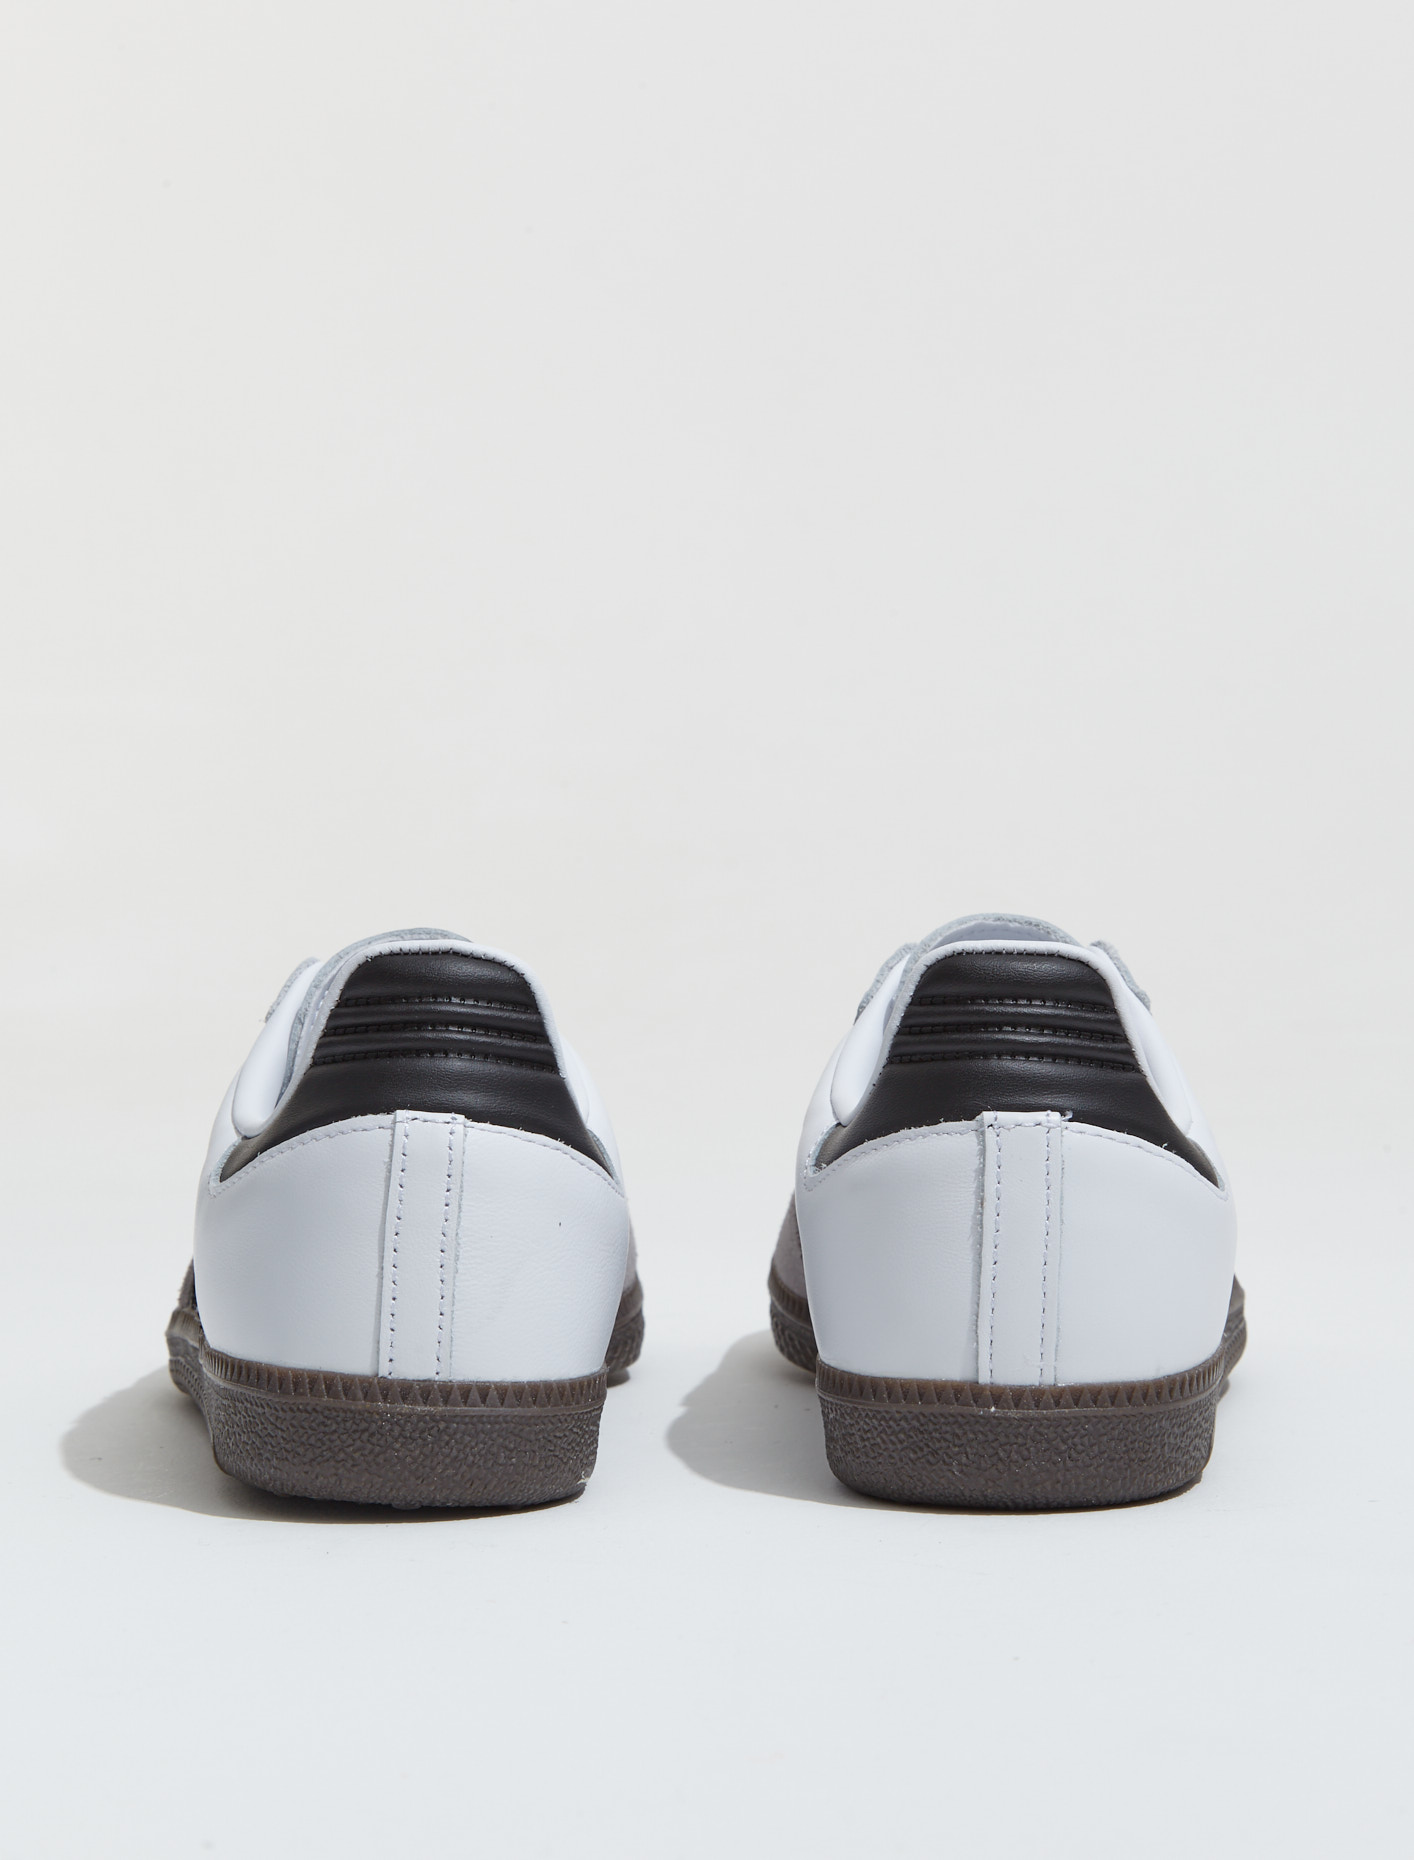 Adidas Samba OG Sneaker in White | Voo Store Berlin | Worldwide Shipping